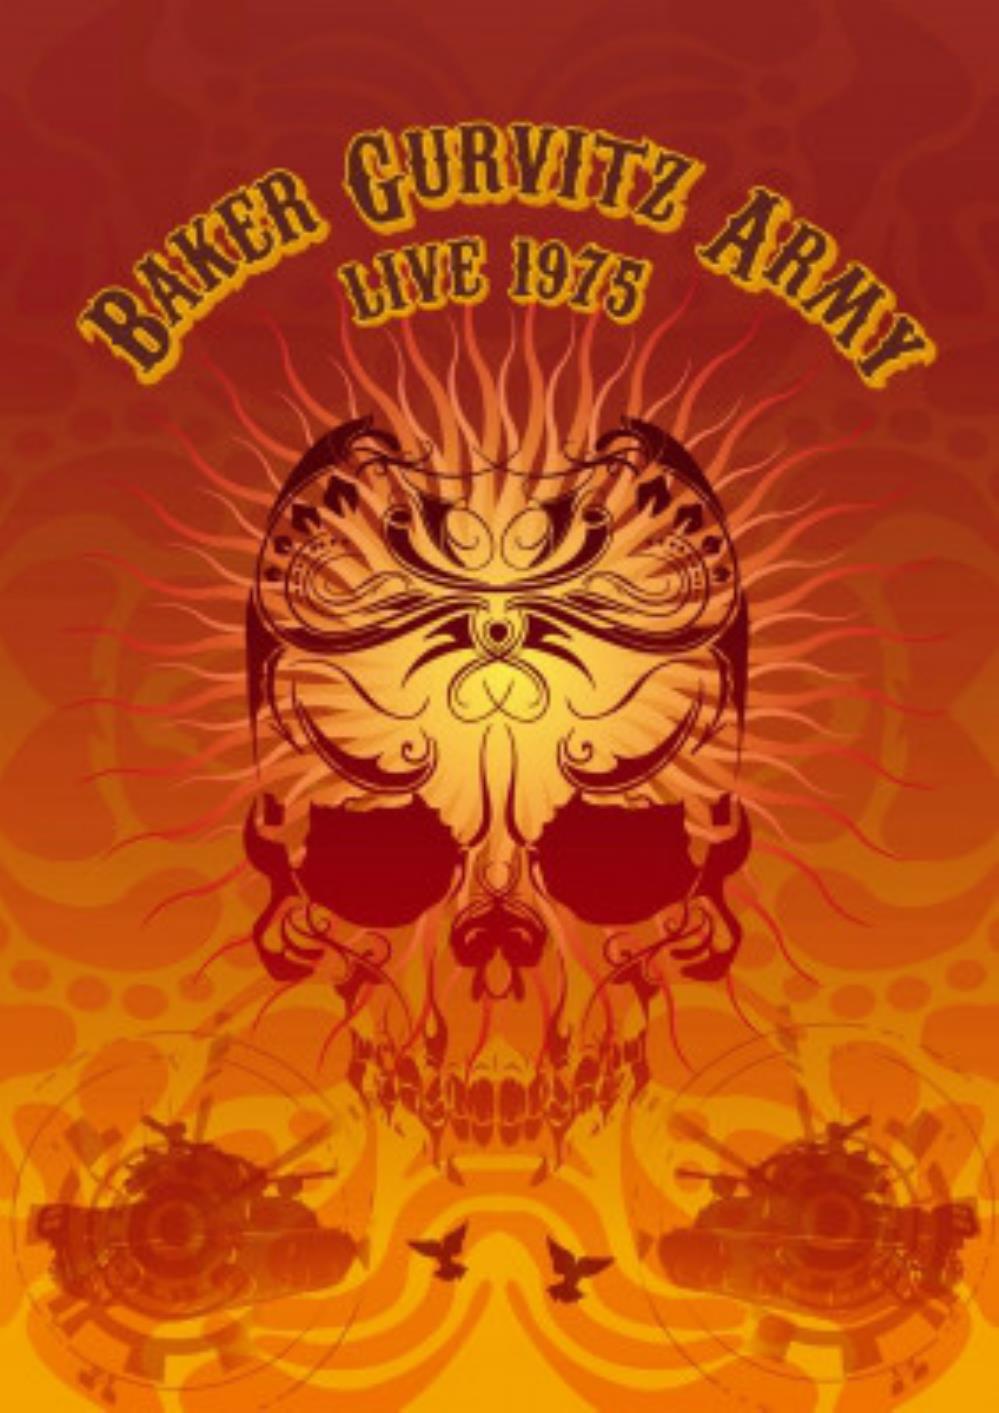 Baker Gurvitz Army - Live 1975 CD (album) cover